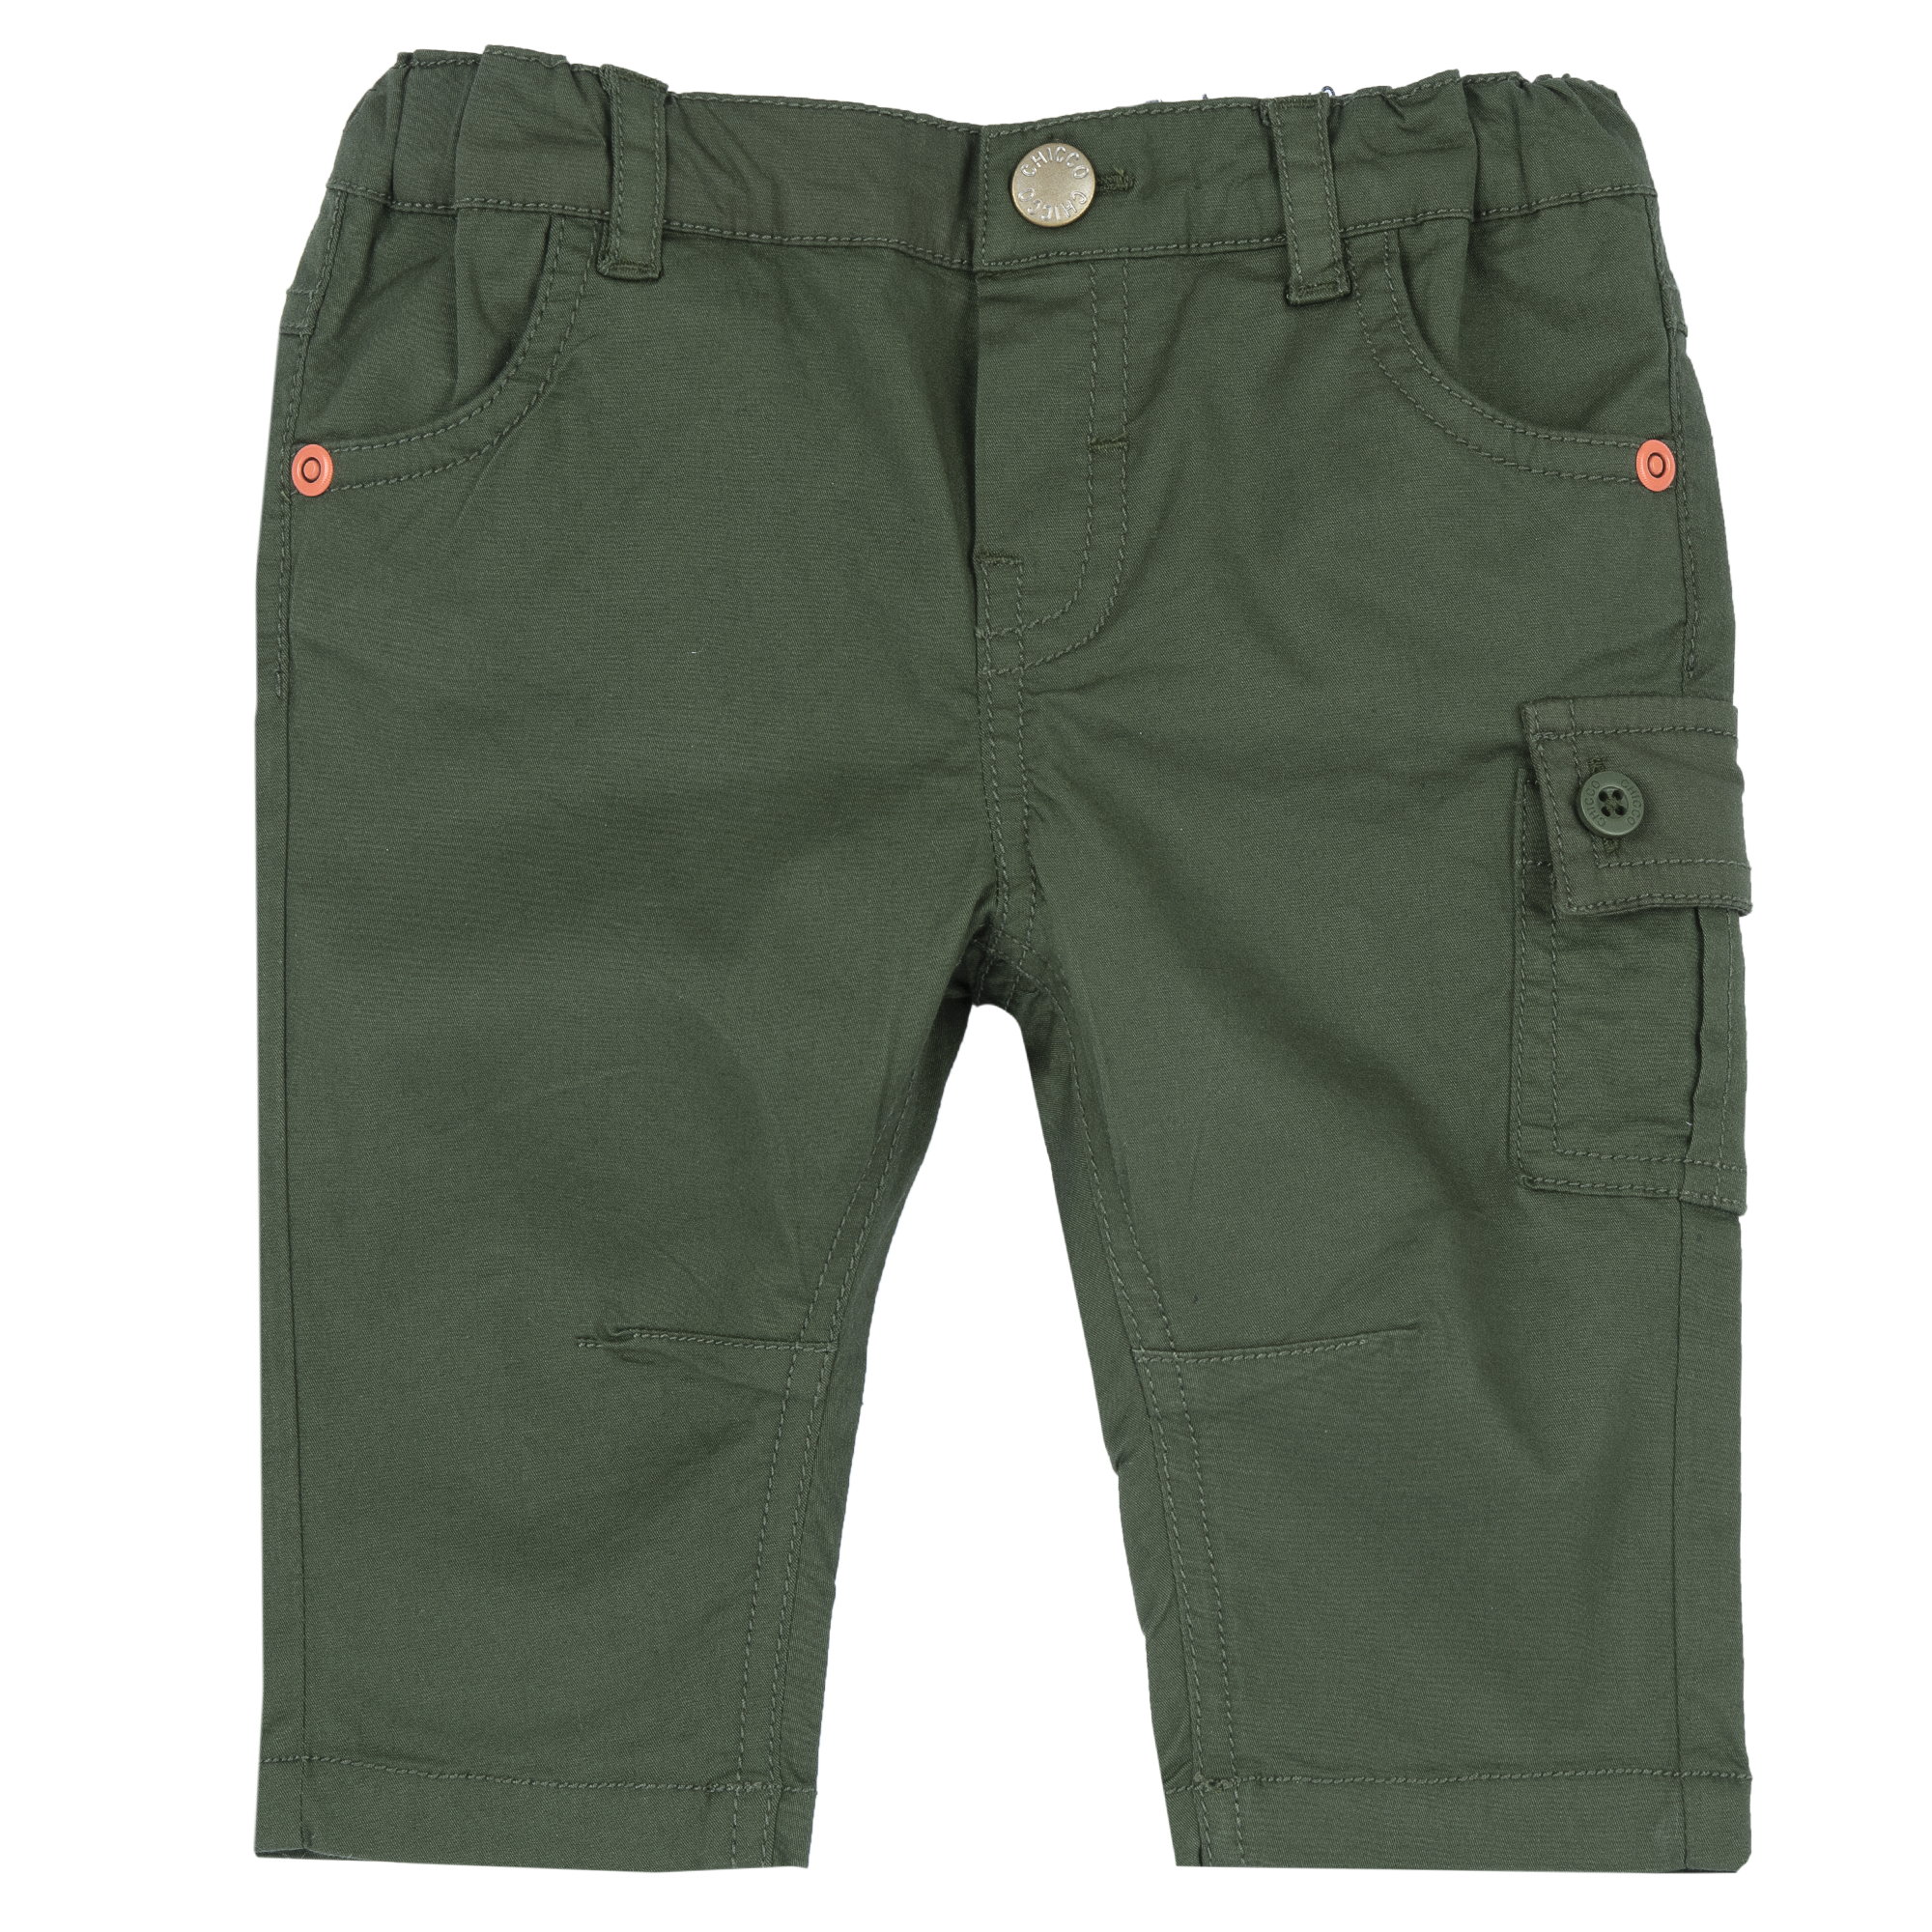 Pantaloni Copii Chicco, Verde, 55893-66mfco